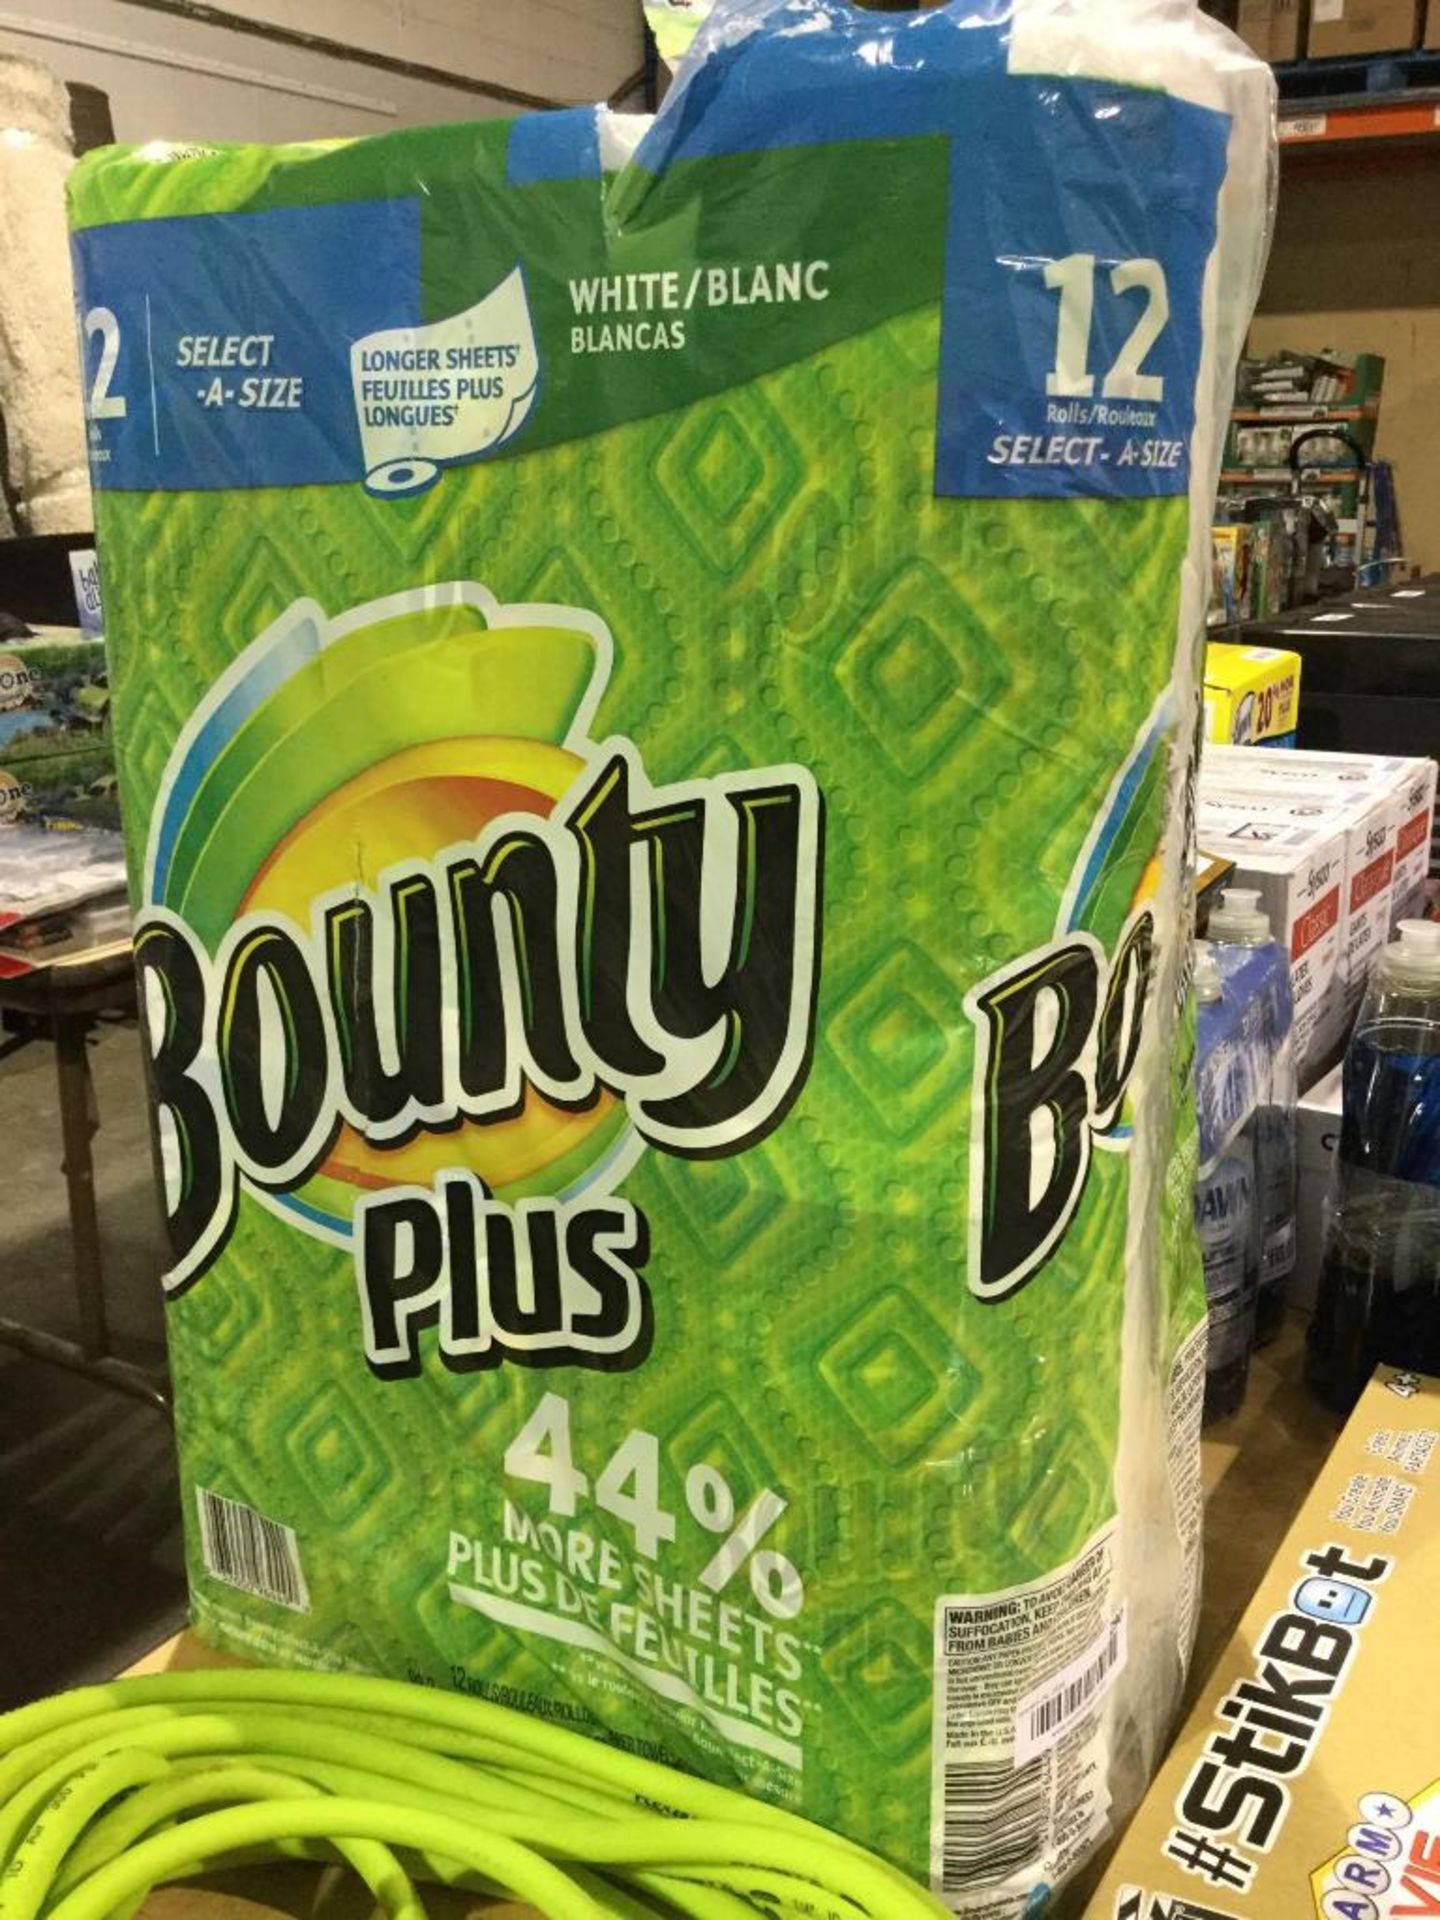 12 Pack of Bounty Plus Paper towel